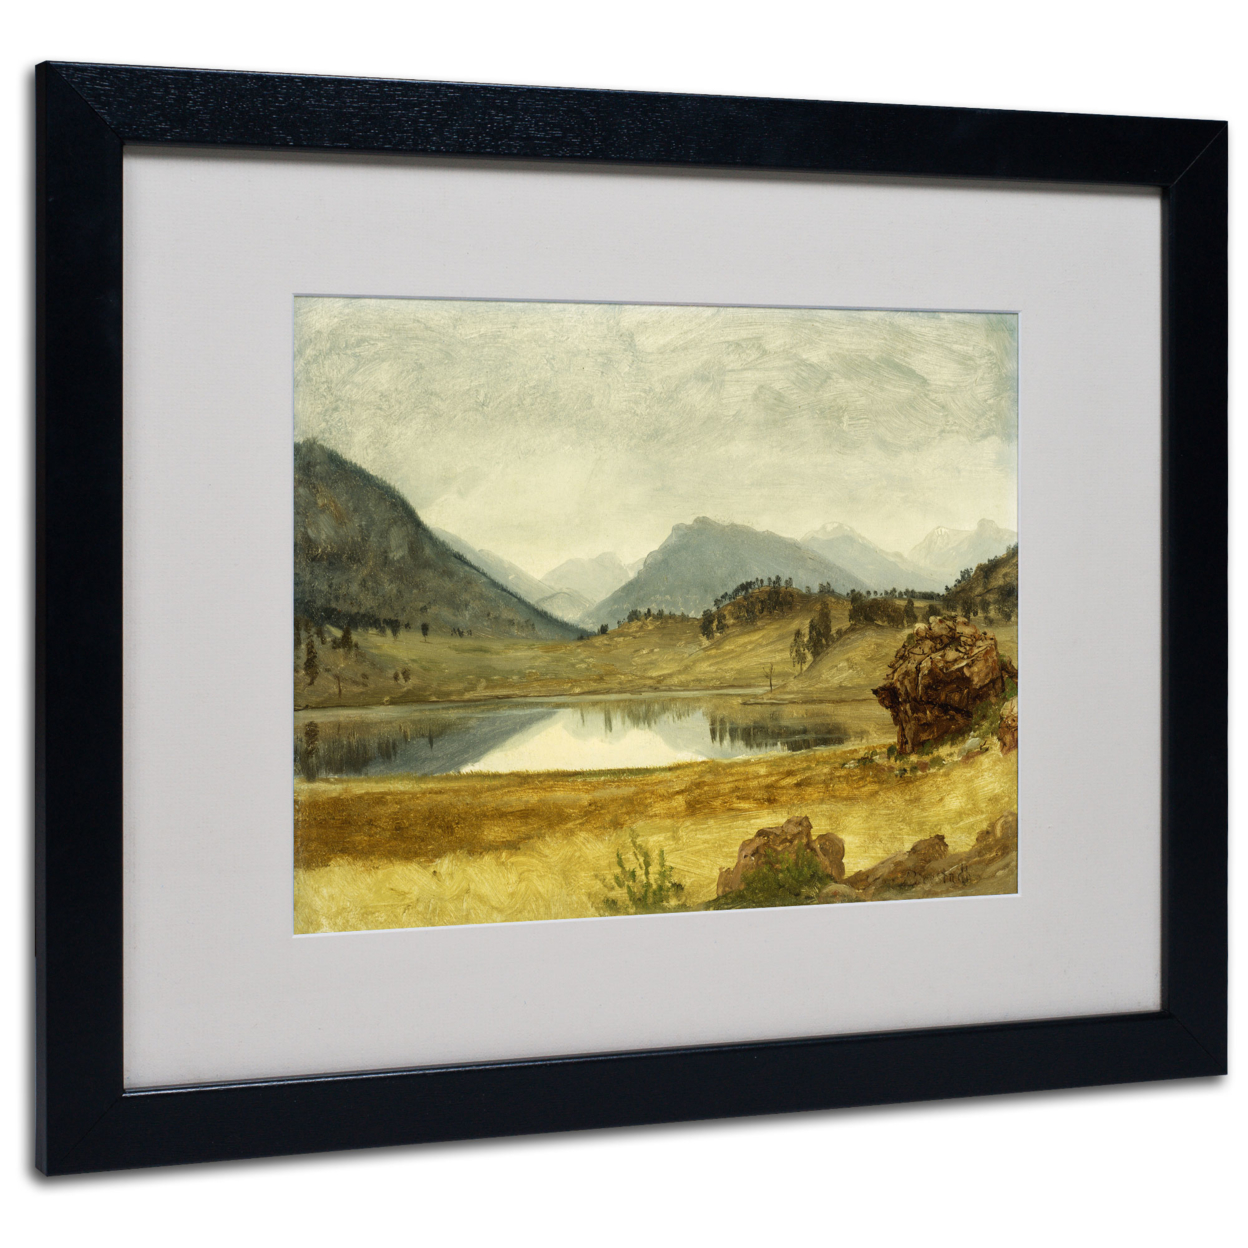 Albert Bierstadt 'Wind River Country' Black Wooden Framed Art 18 X 22 Inches